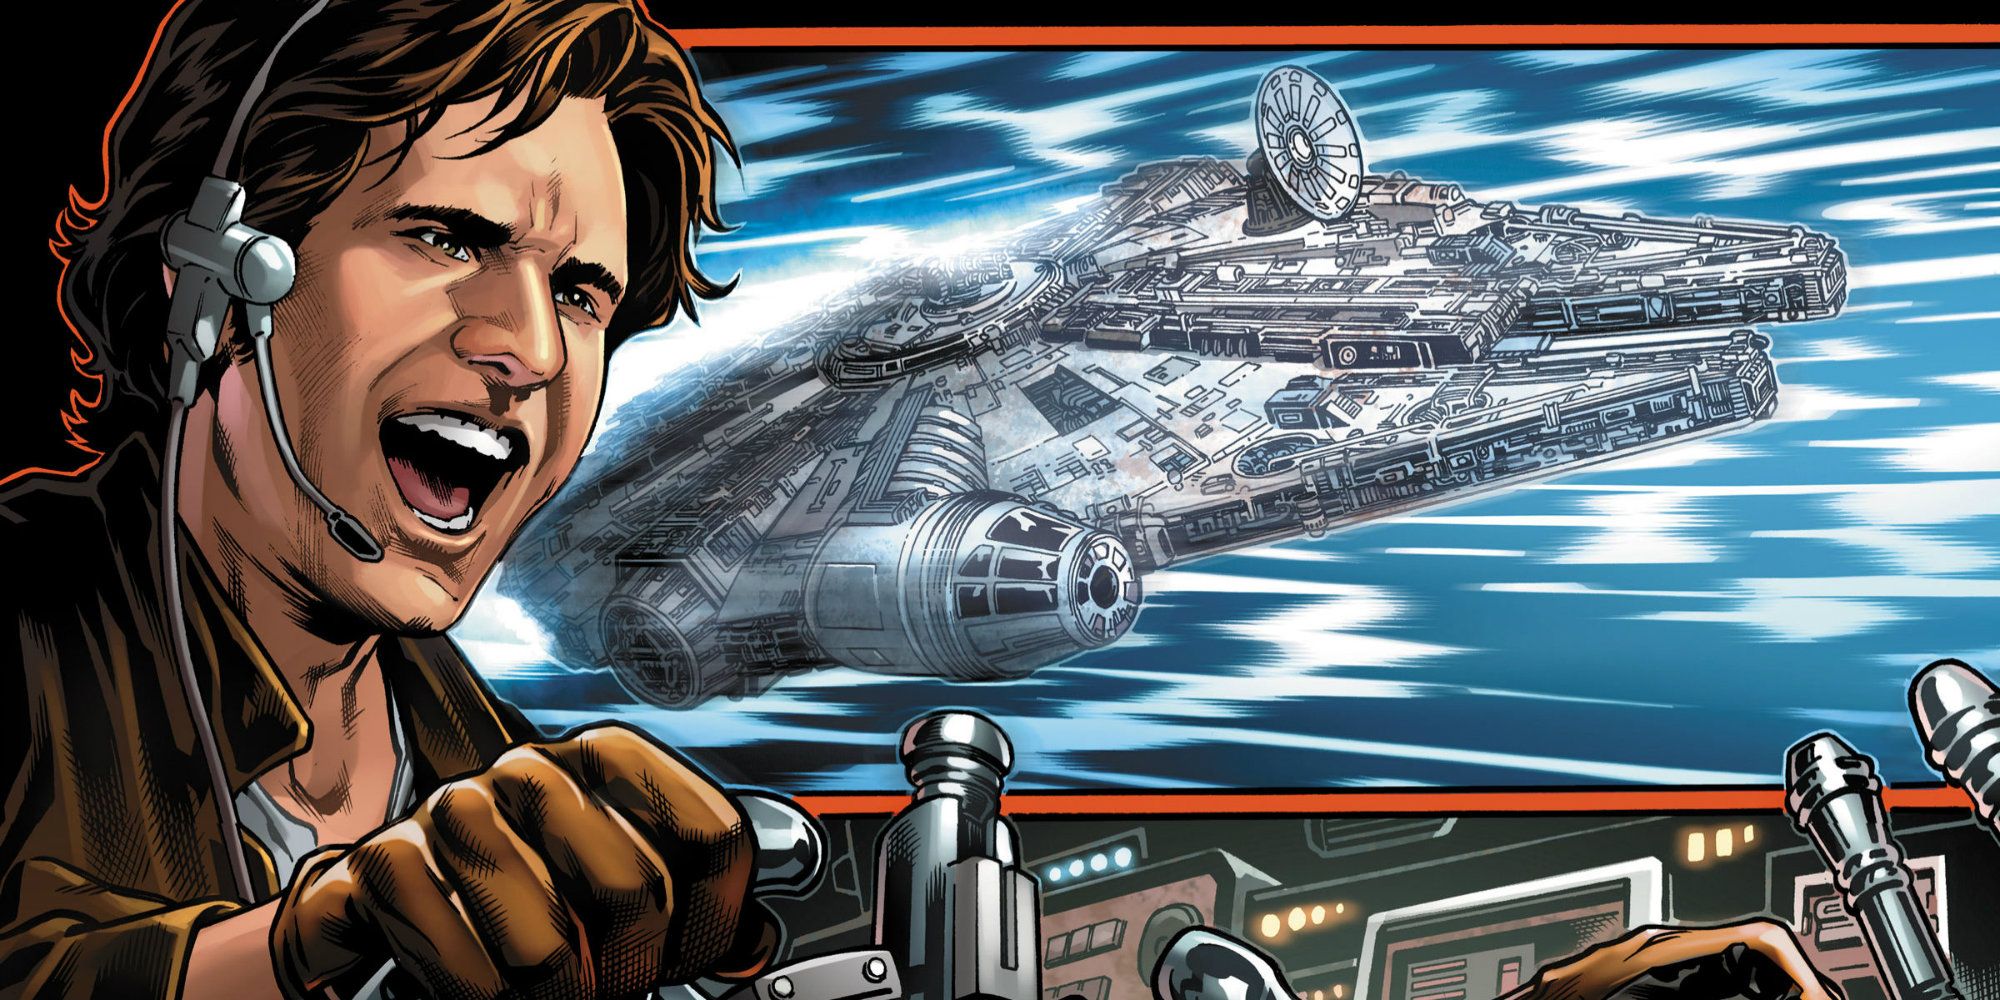 Star Wars - Han Solo comic book